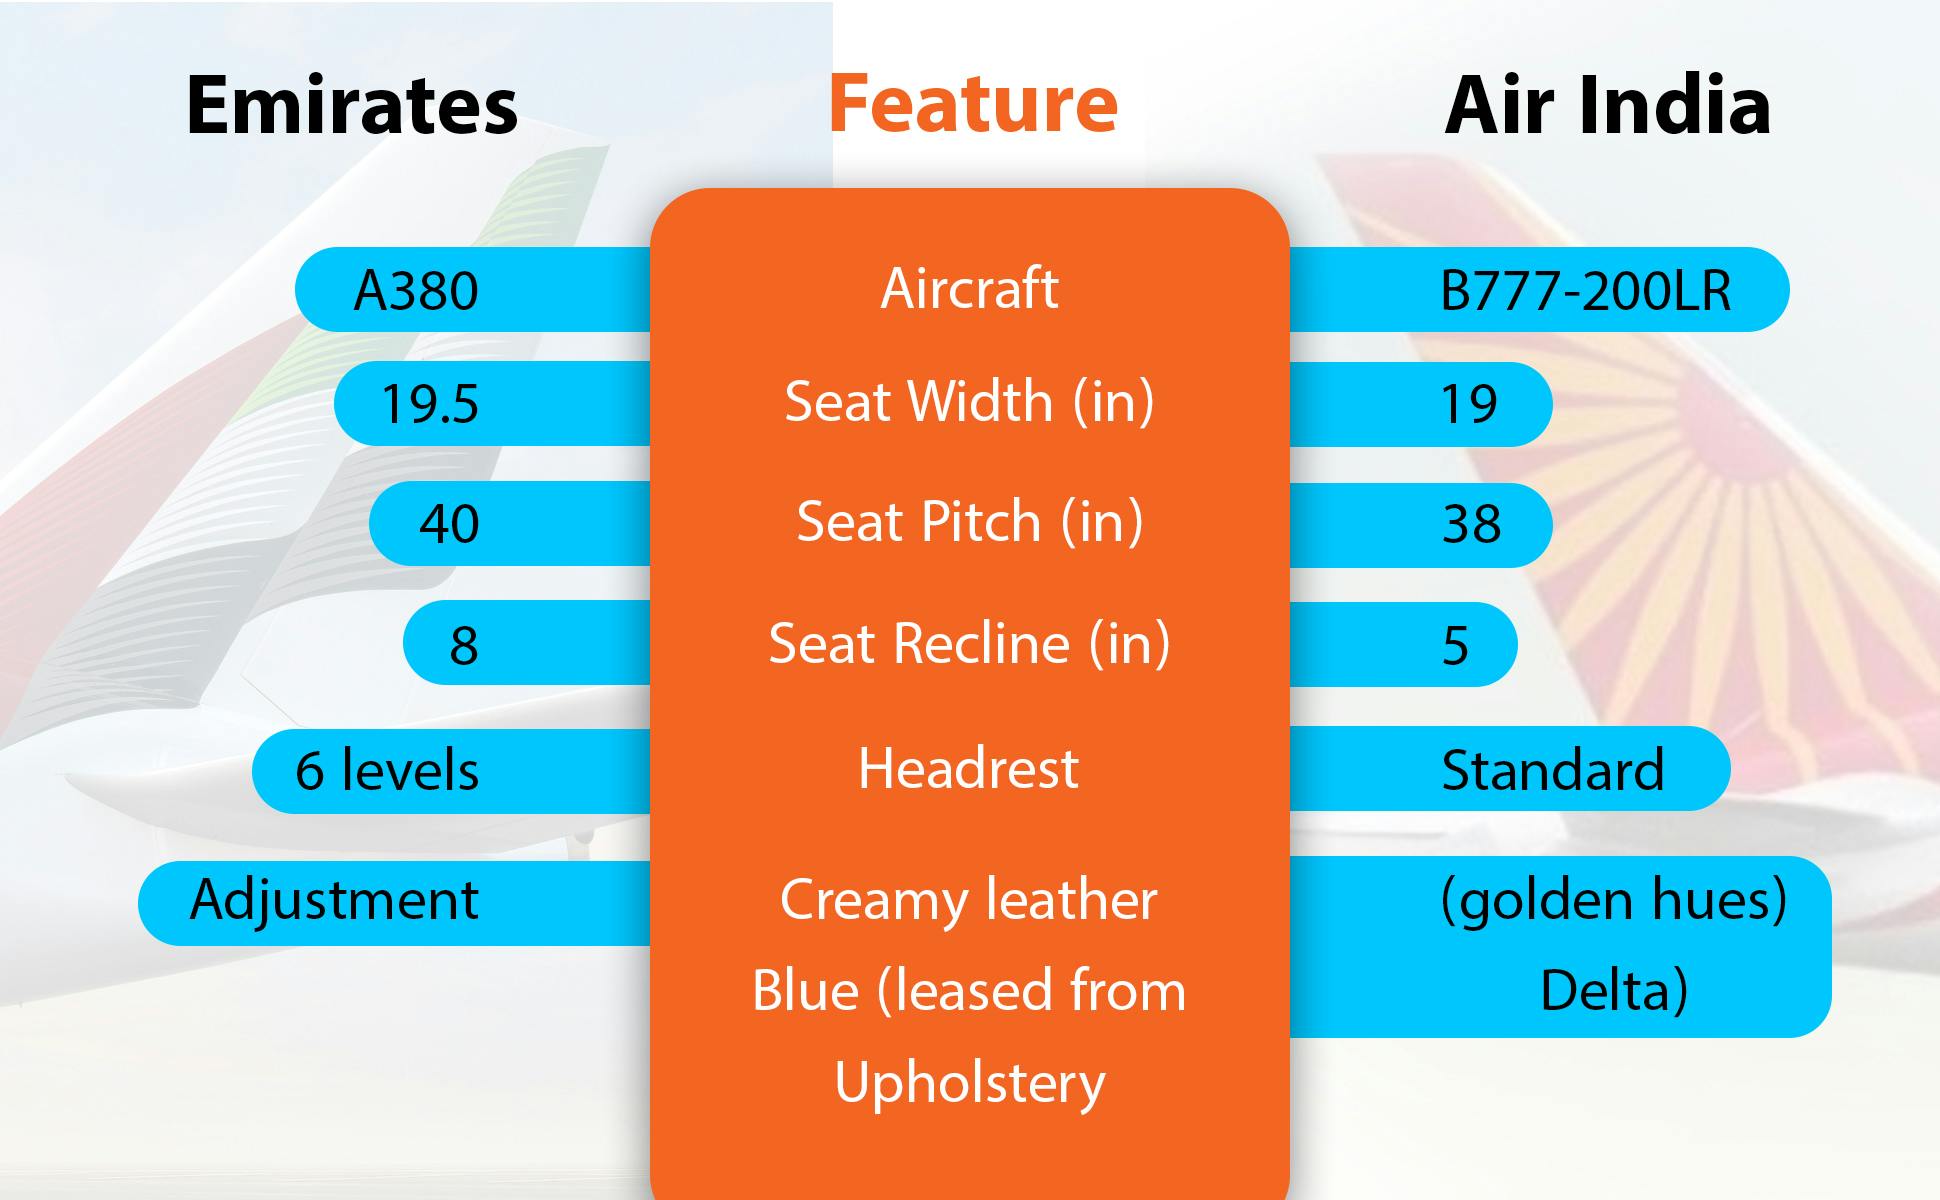 Air India First Class VS Emirates First Class